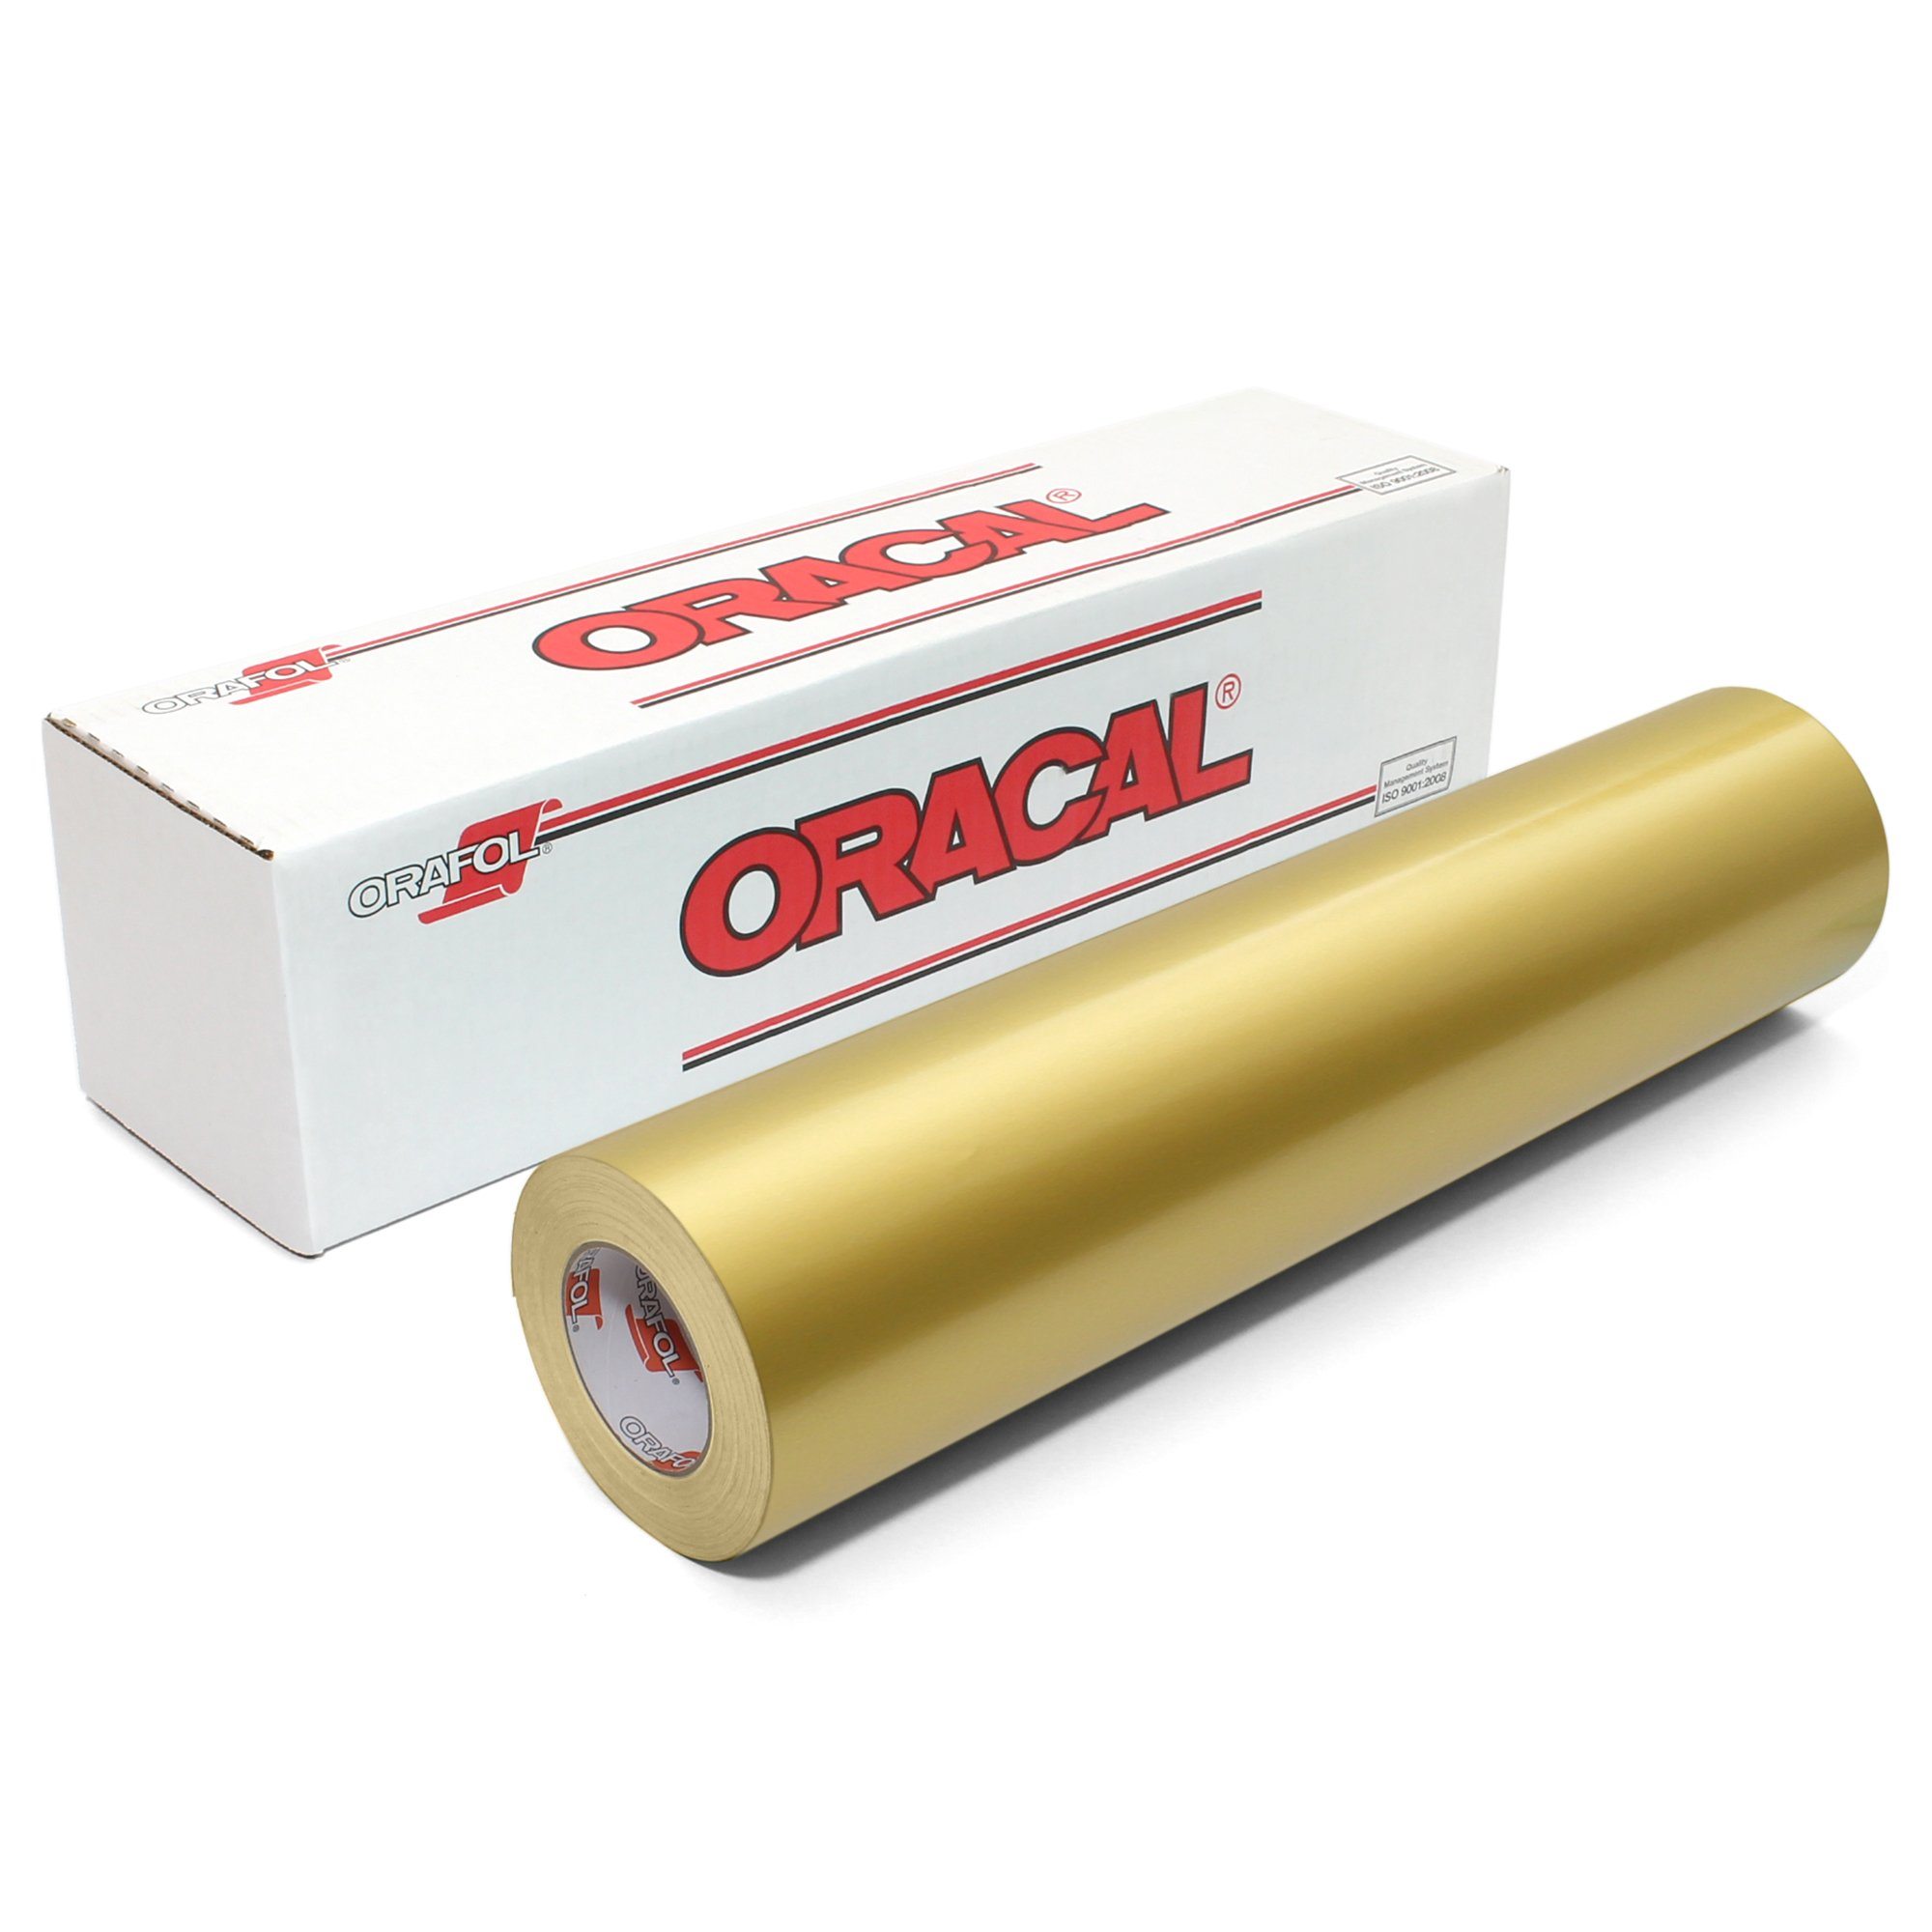 Oracal 651 Permanent Adhesive Vinyl Gloss - Color: Gold Metallic 091 -  JDMFV WRAPS